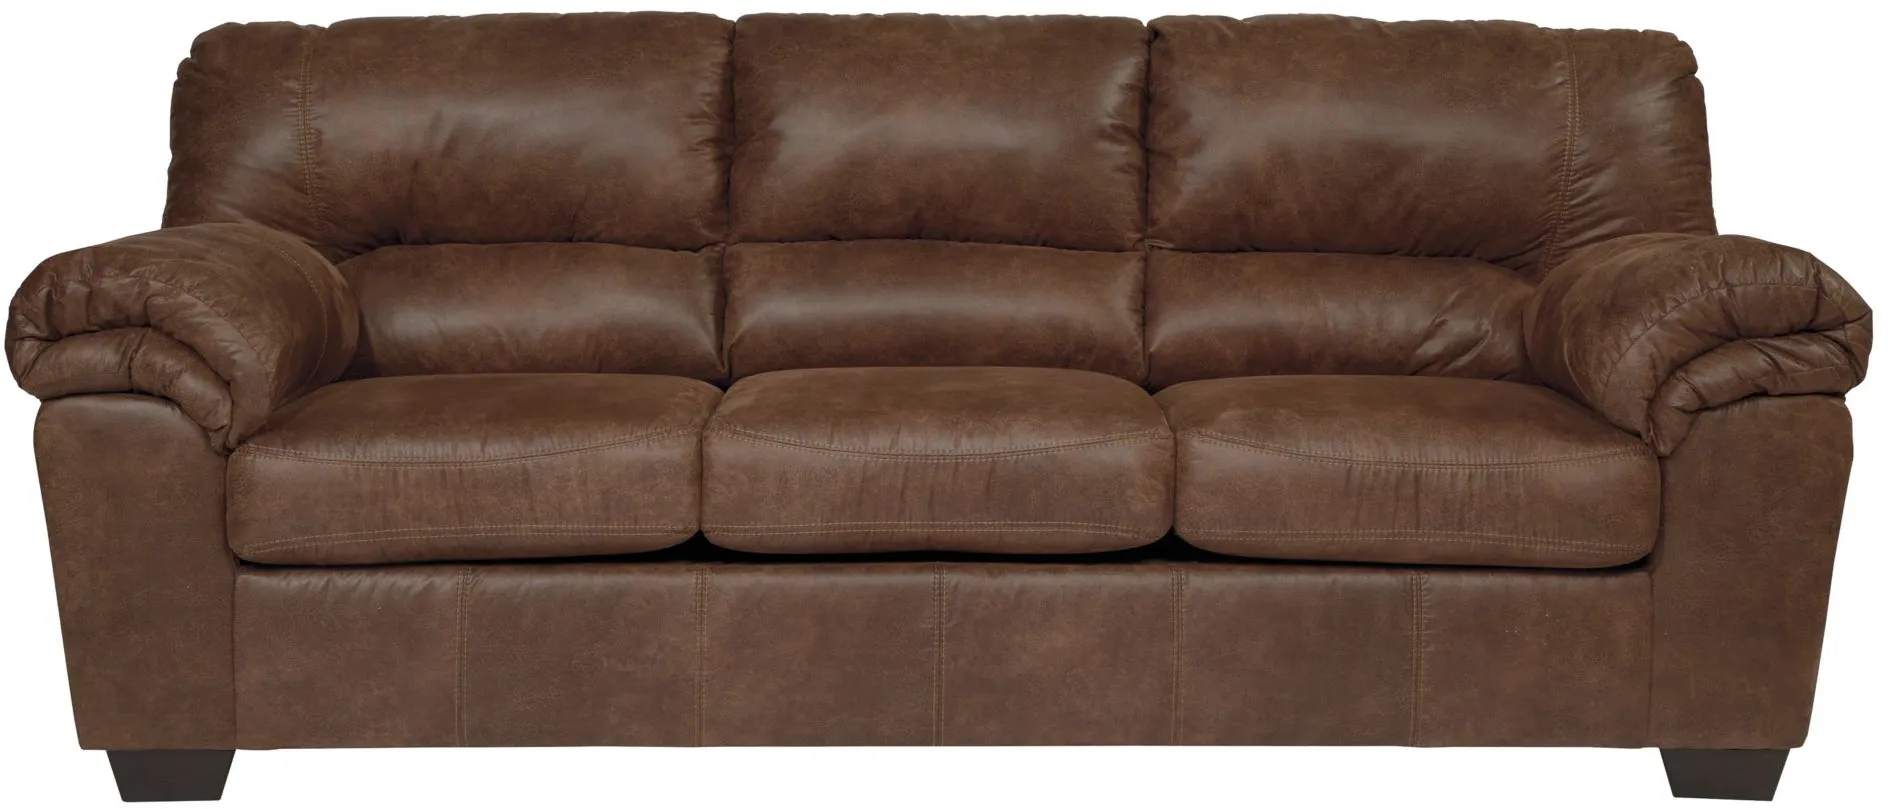 1060 green leather look sofa